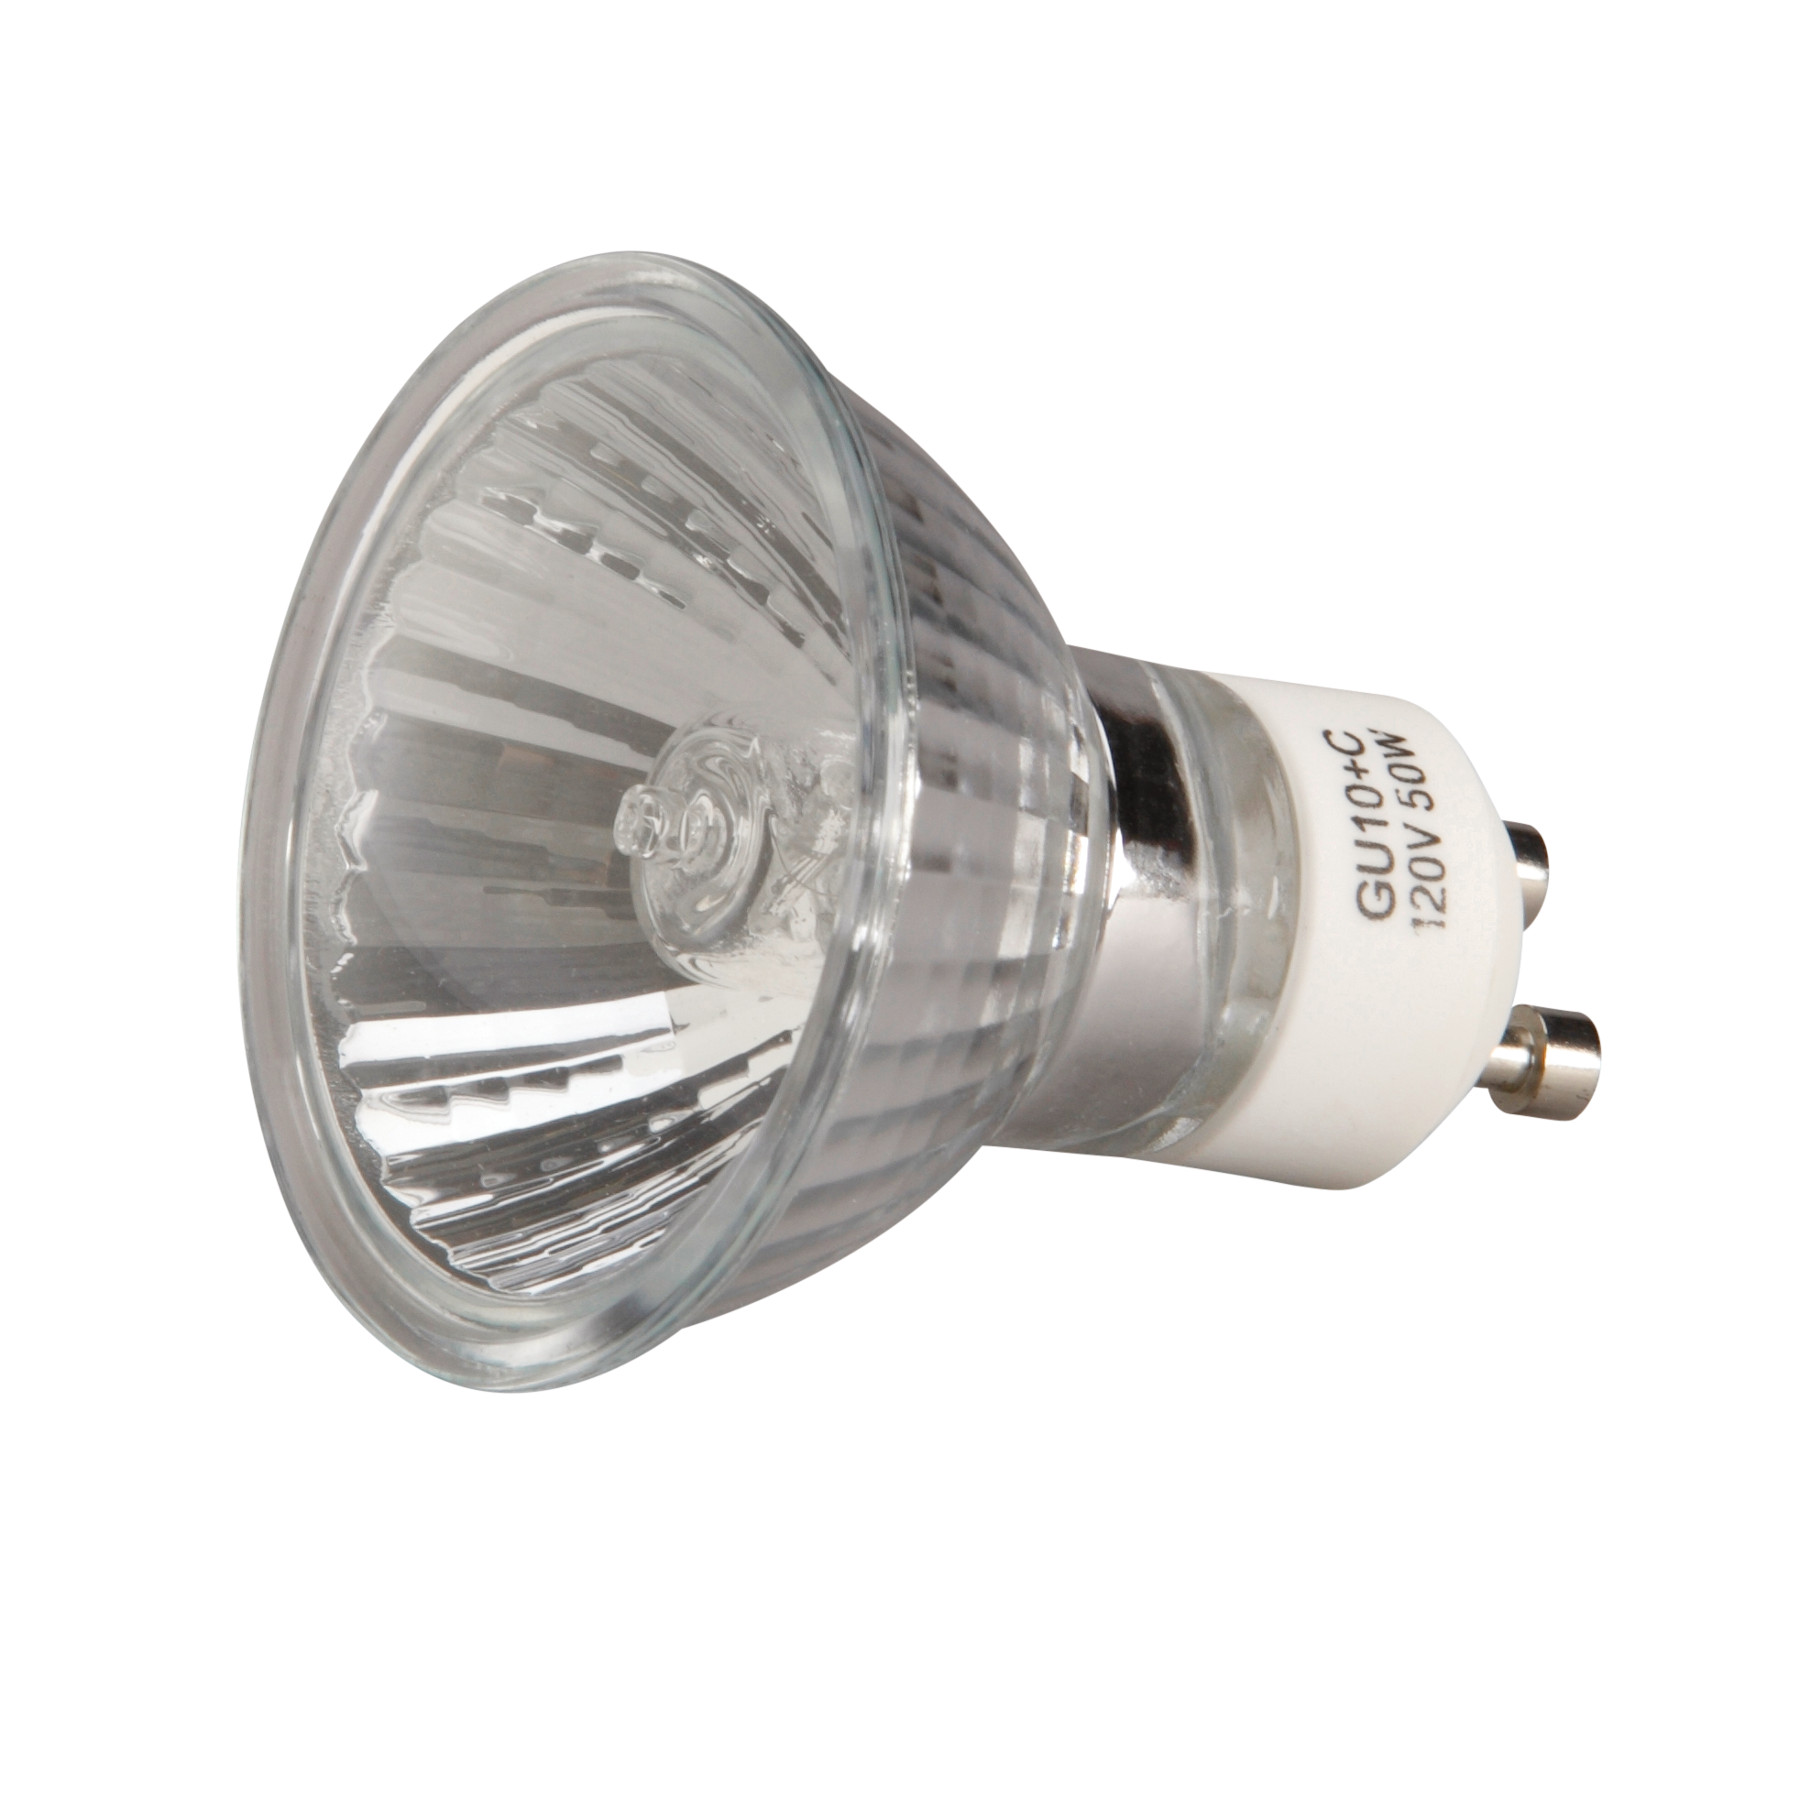 4)-Pack for Range Hood Kitchen 50W Light Bulbs 50-Watts Anyray 